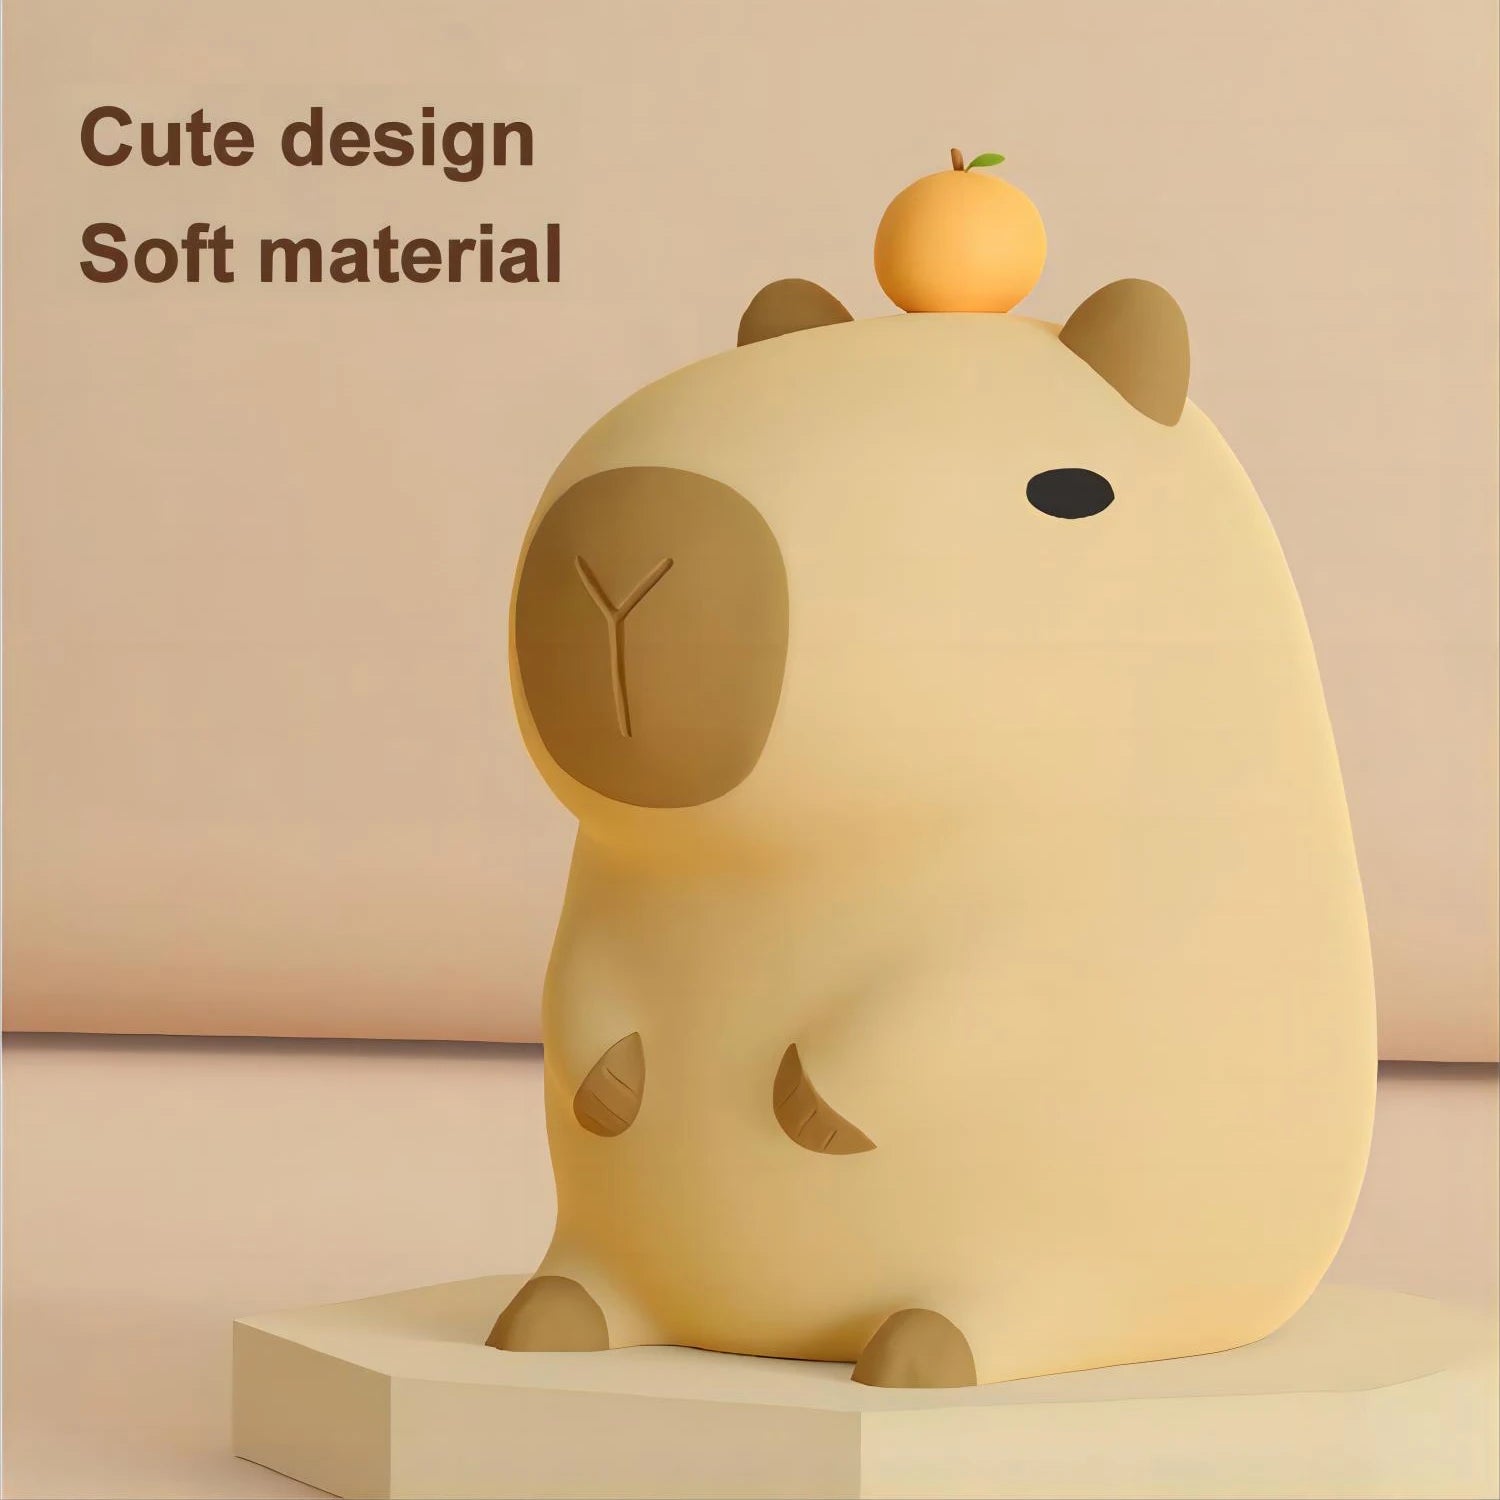 Cute Cartoon Capybara USB Rechargeable Night Light